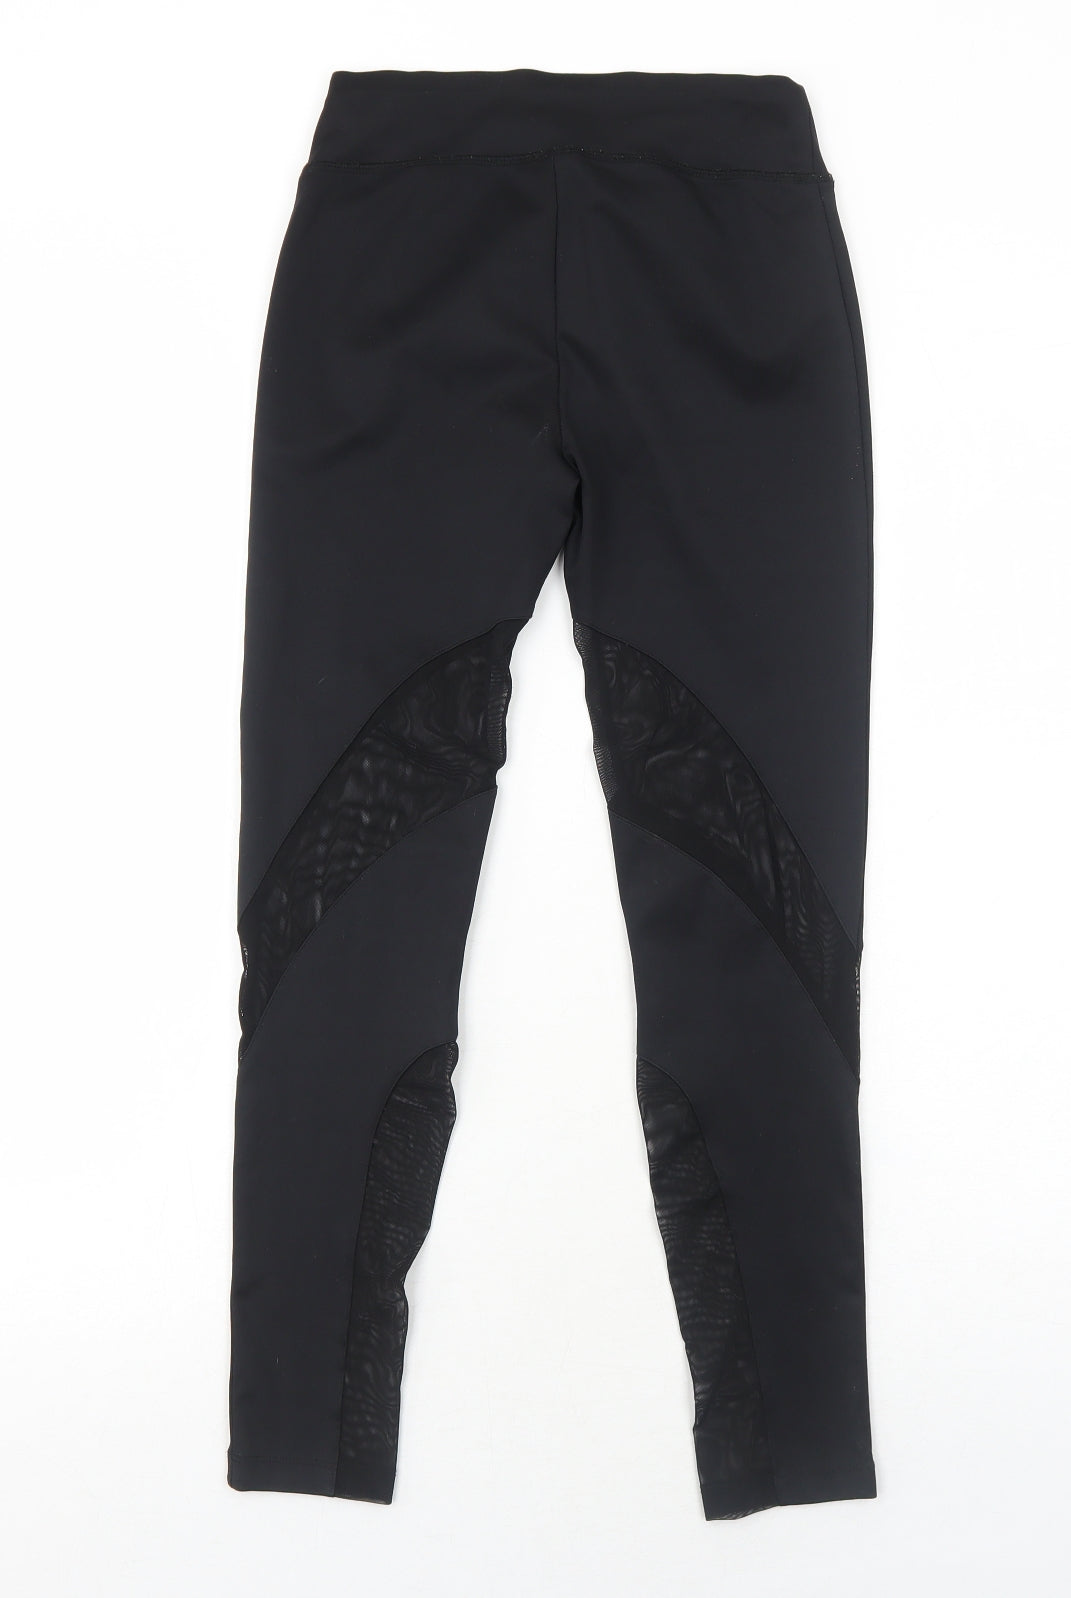 Kisaiya Womens Black Polyester Compression Leggings Size XS Regular Pullover - Leggings Mesh Panels